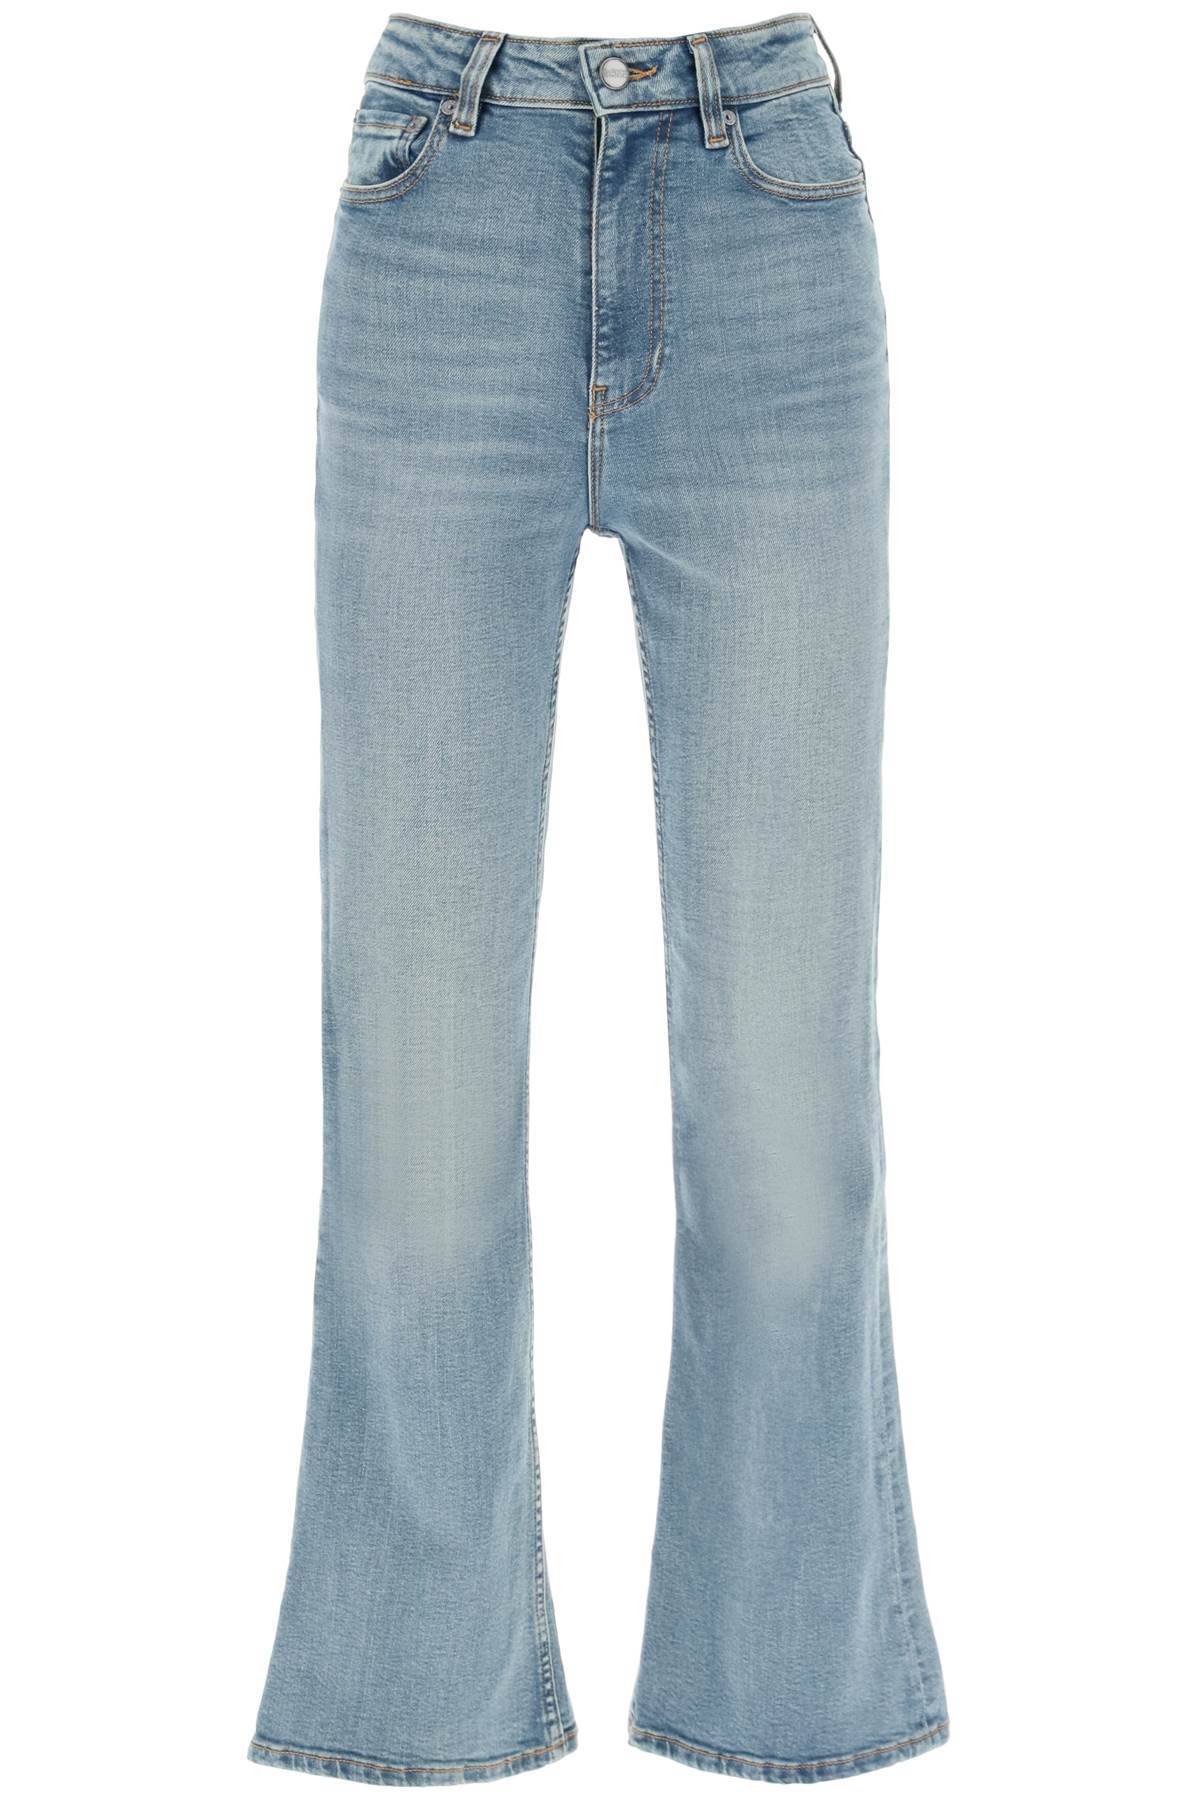 Ganni GANNI bootcut jeans